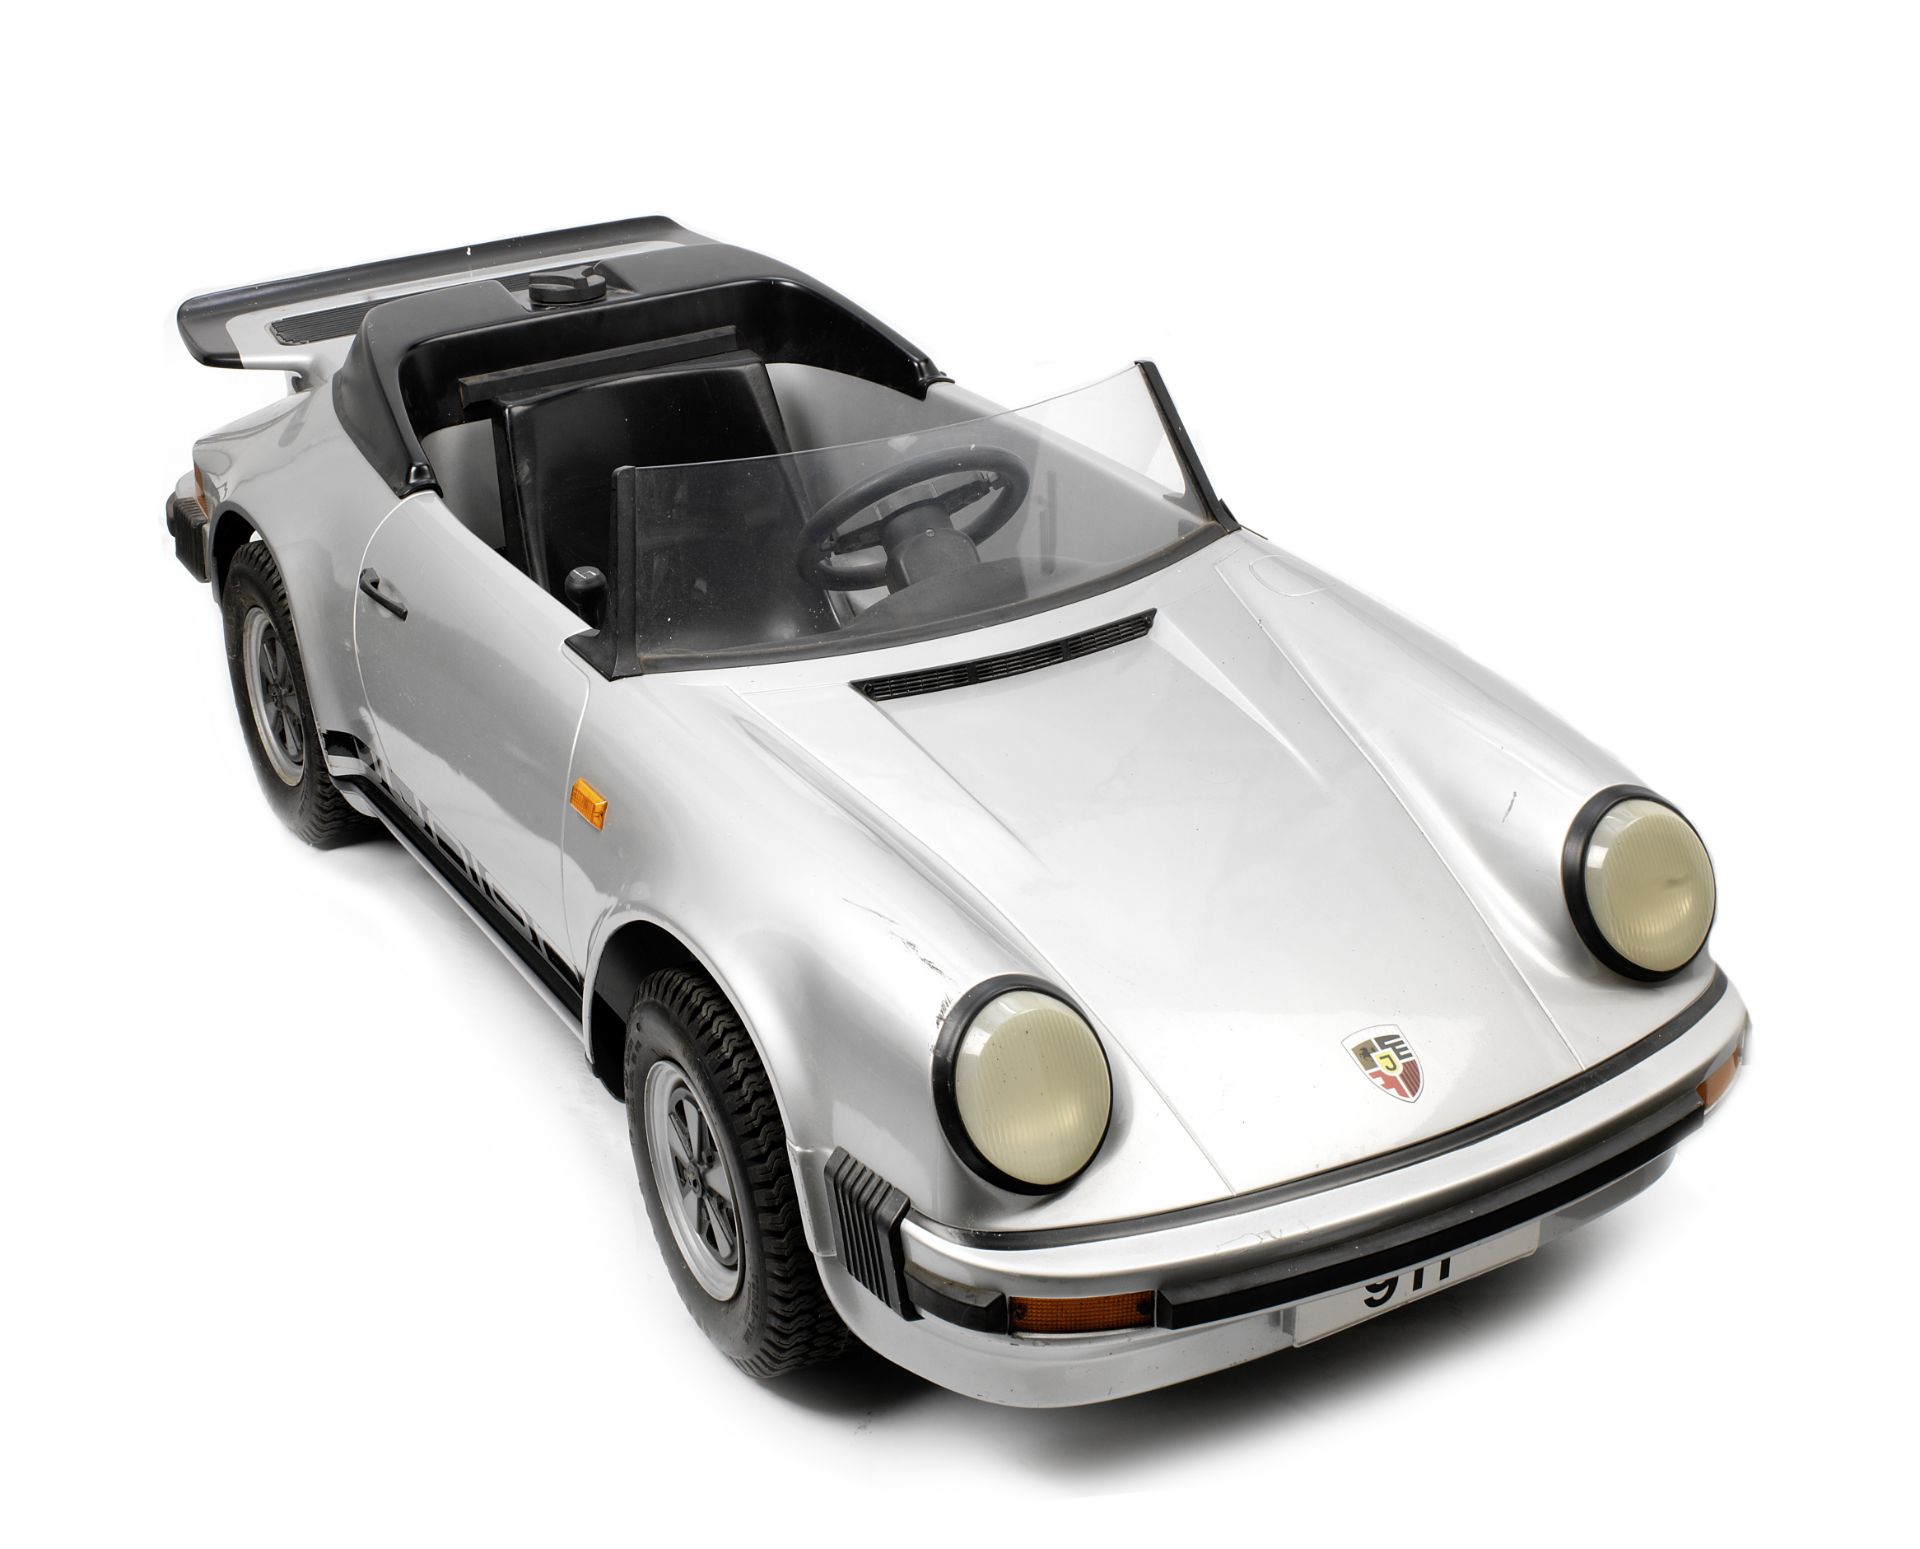 A Porsche 'Junior' 911 Carrera single-seat child's car,